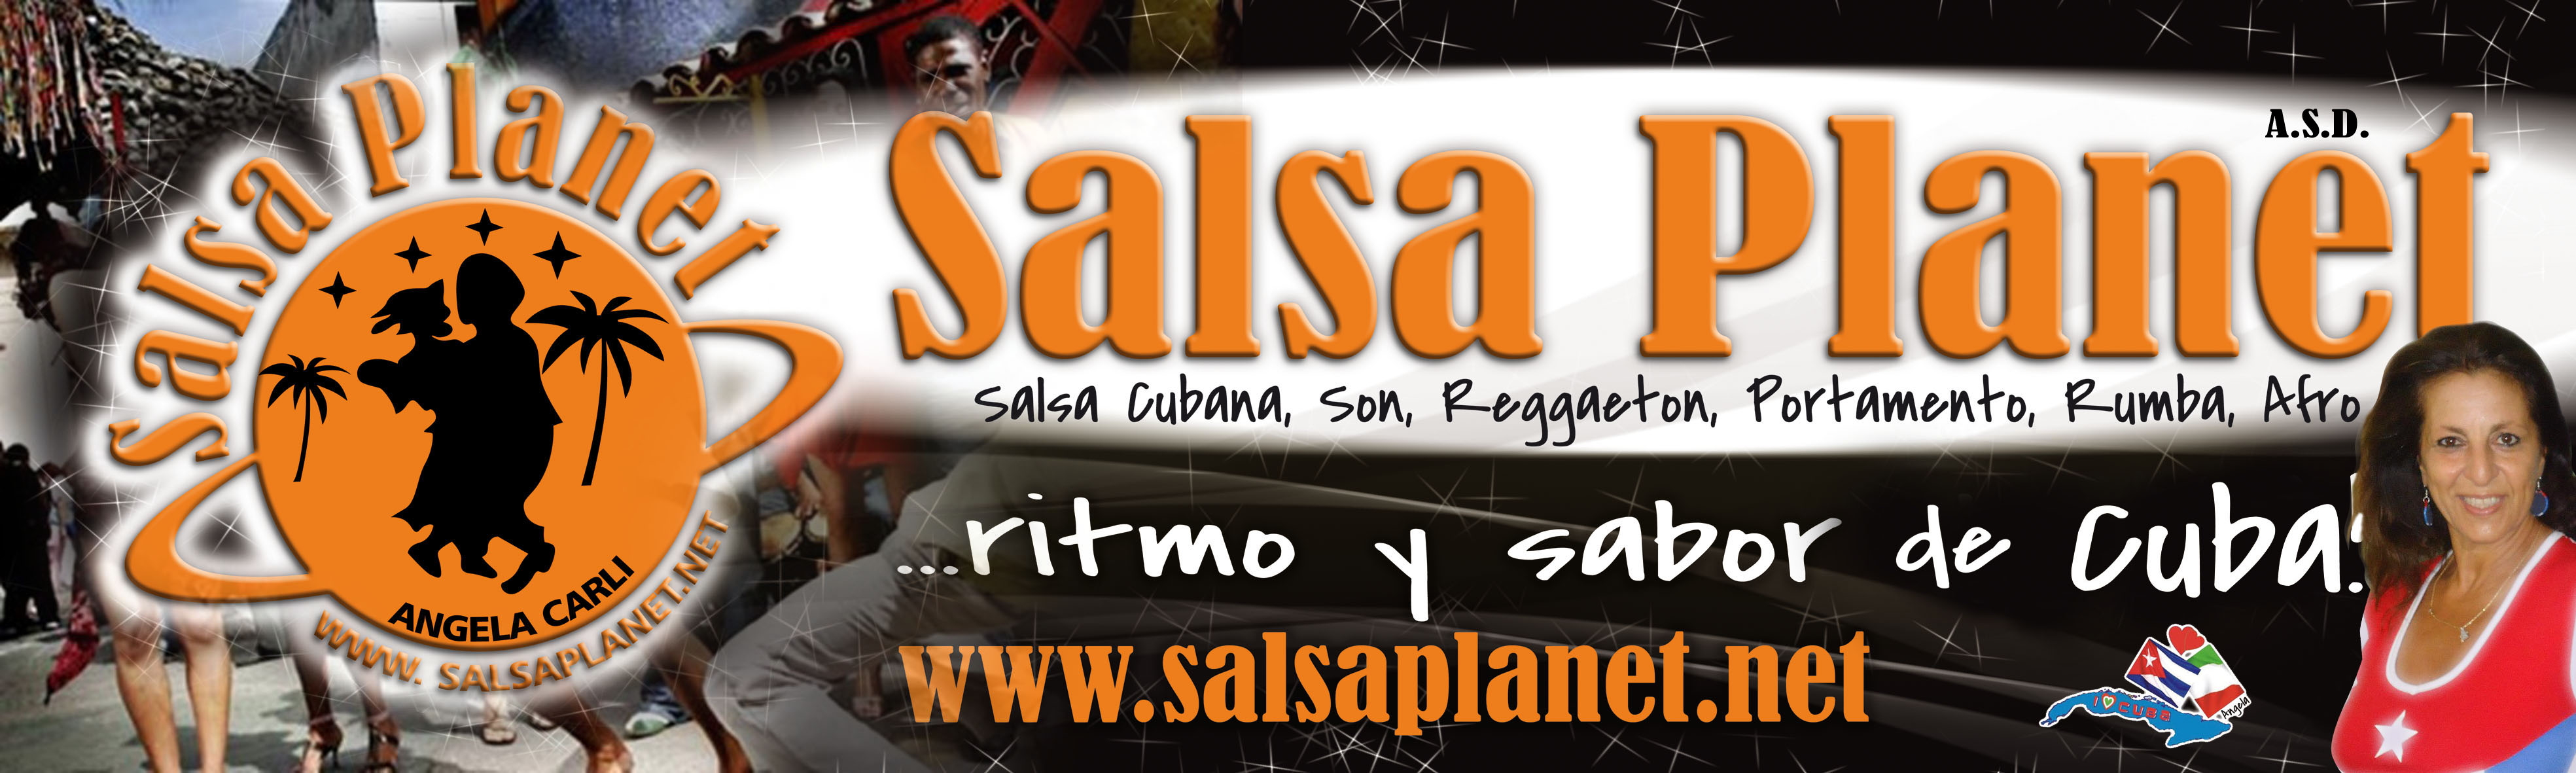 Salsa Planet a.s.d.